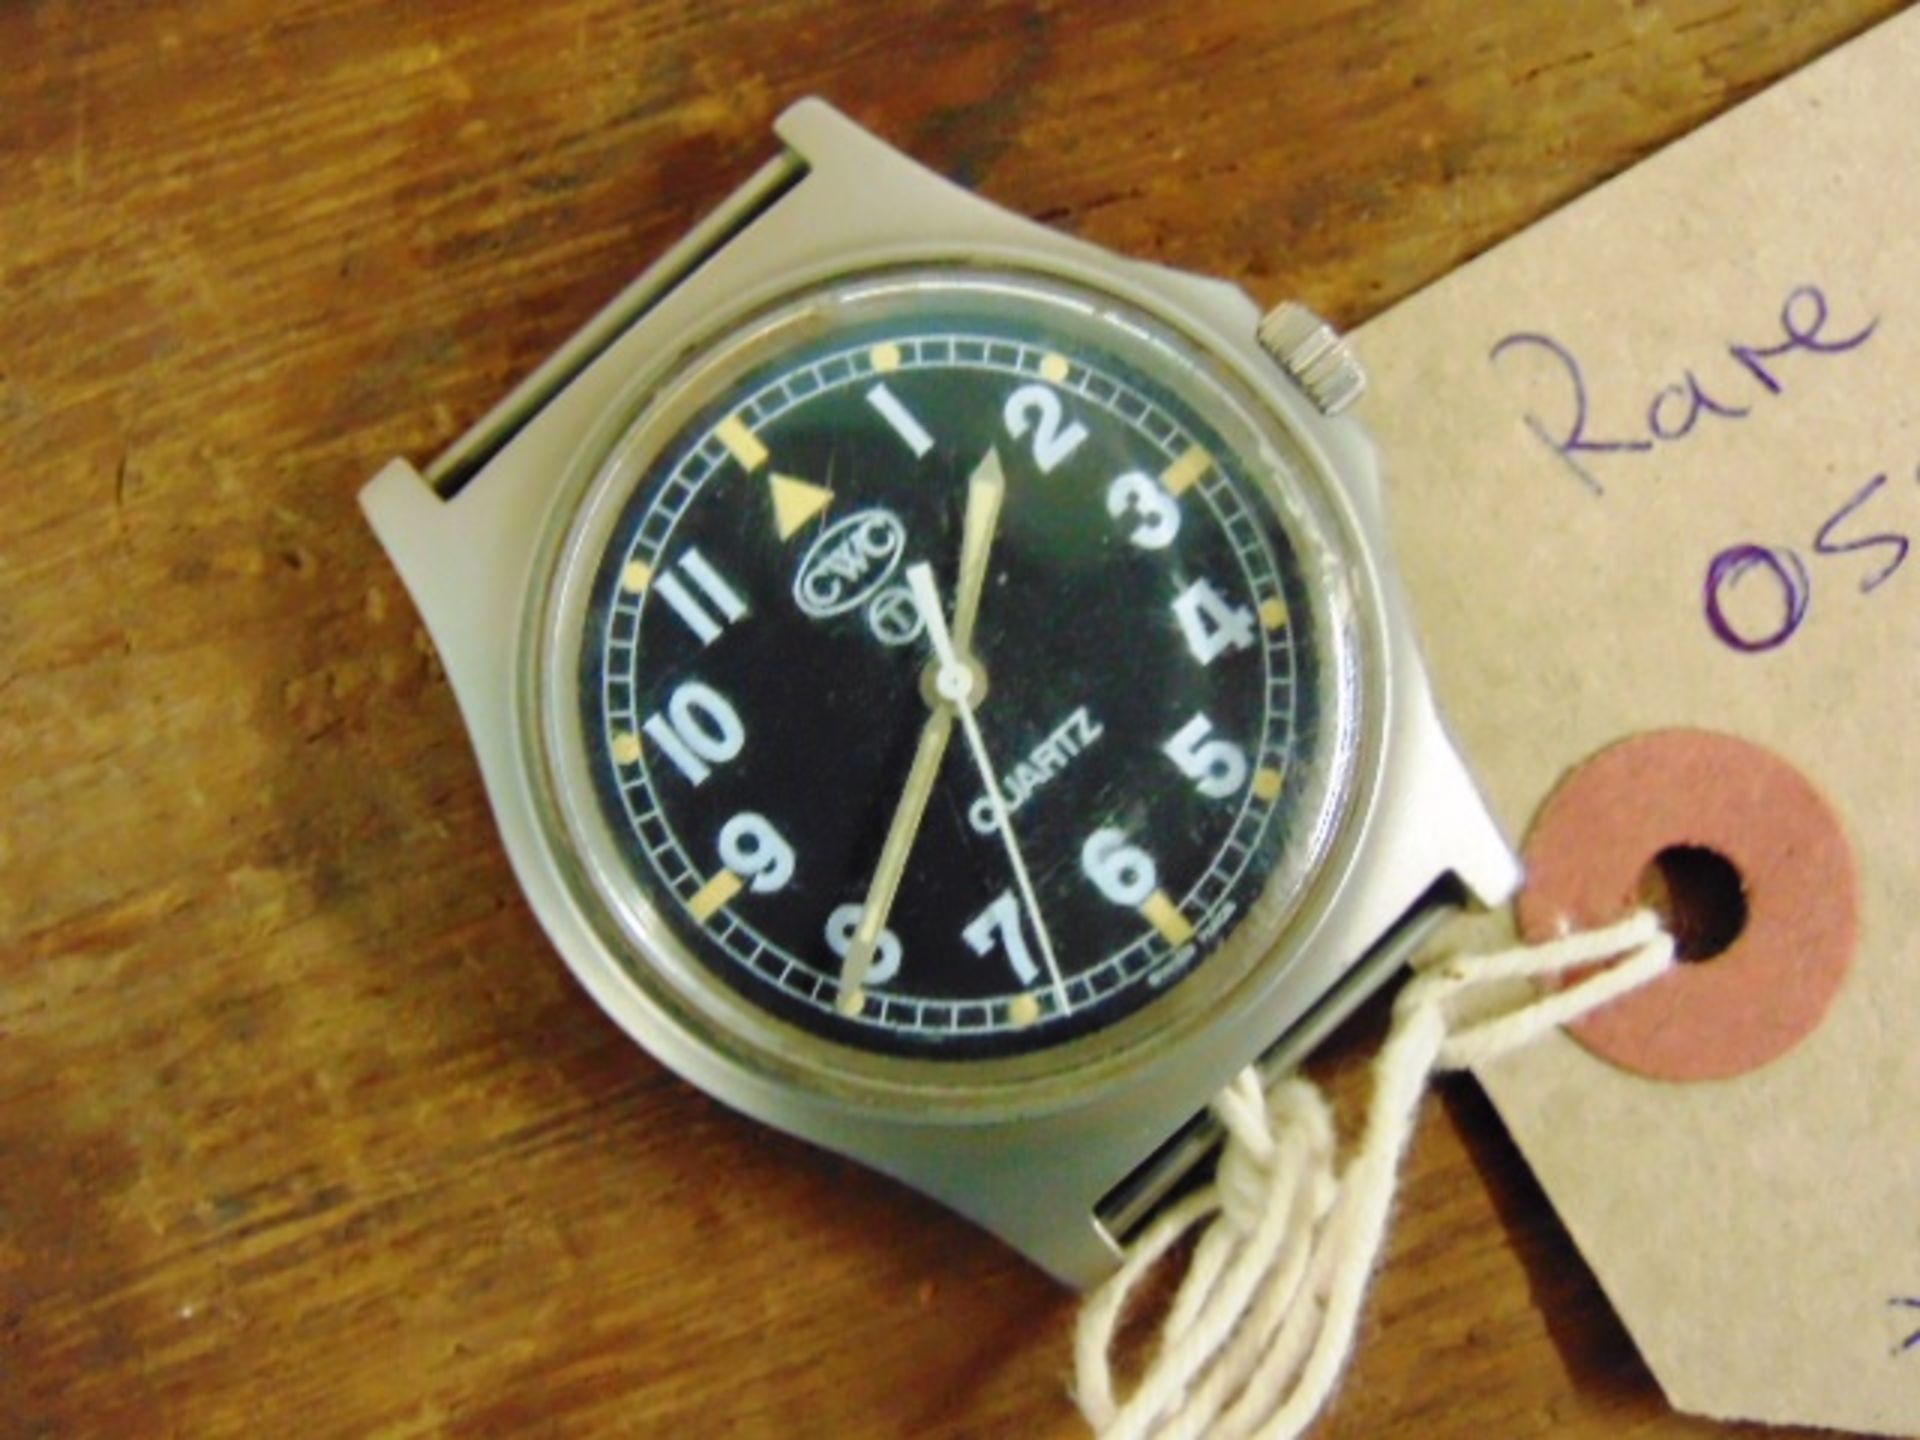 CWC Royal Marines Navy issue 0555 quartz wrist watch - Image 2 of 3